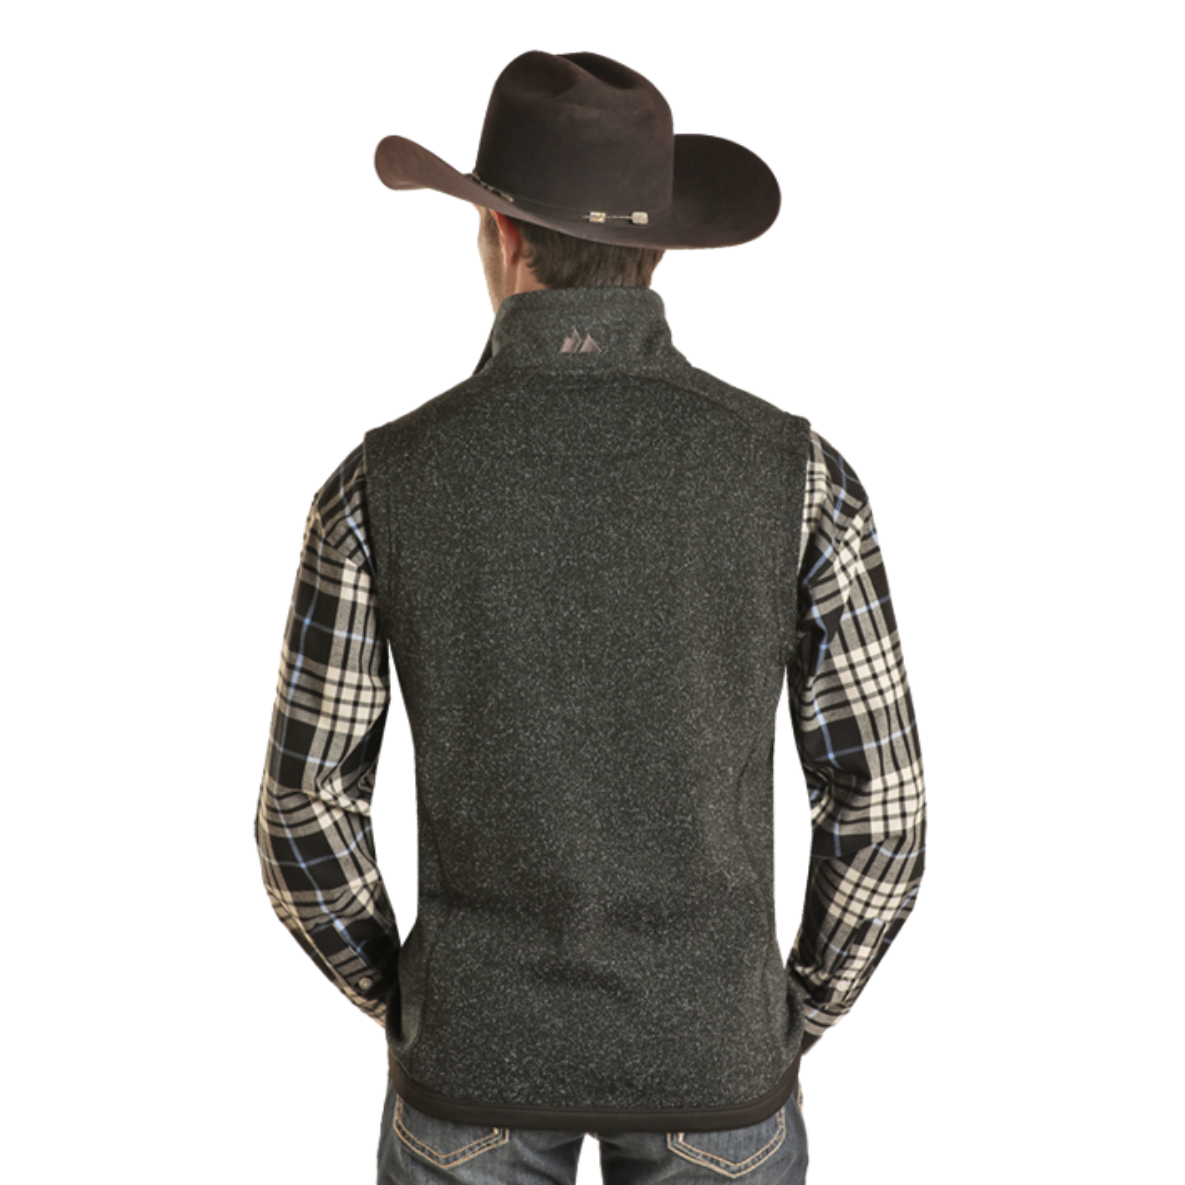 Powder River Outfitters Men's Knit Melange Black Vest DM98C01485-01